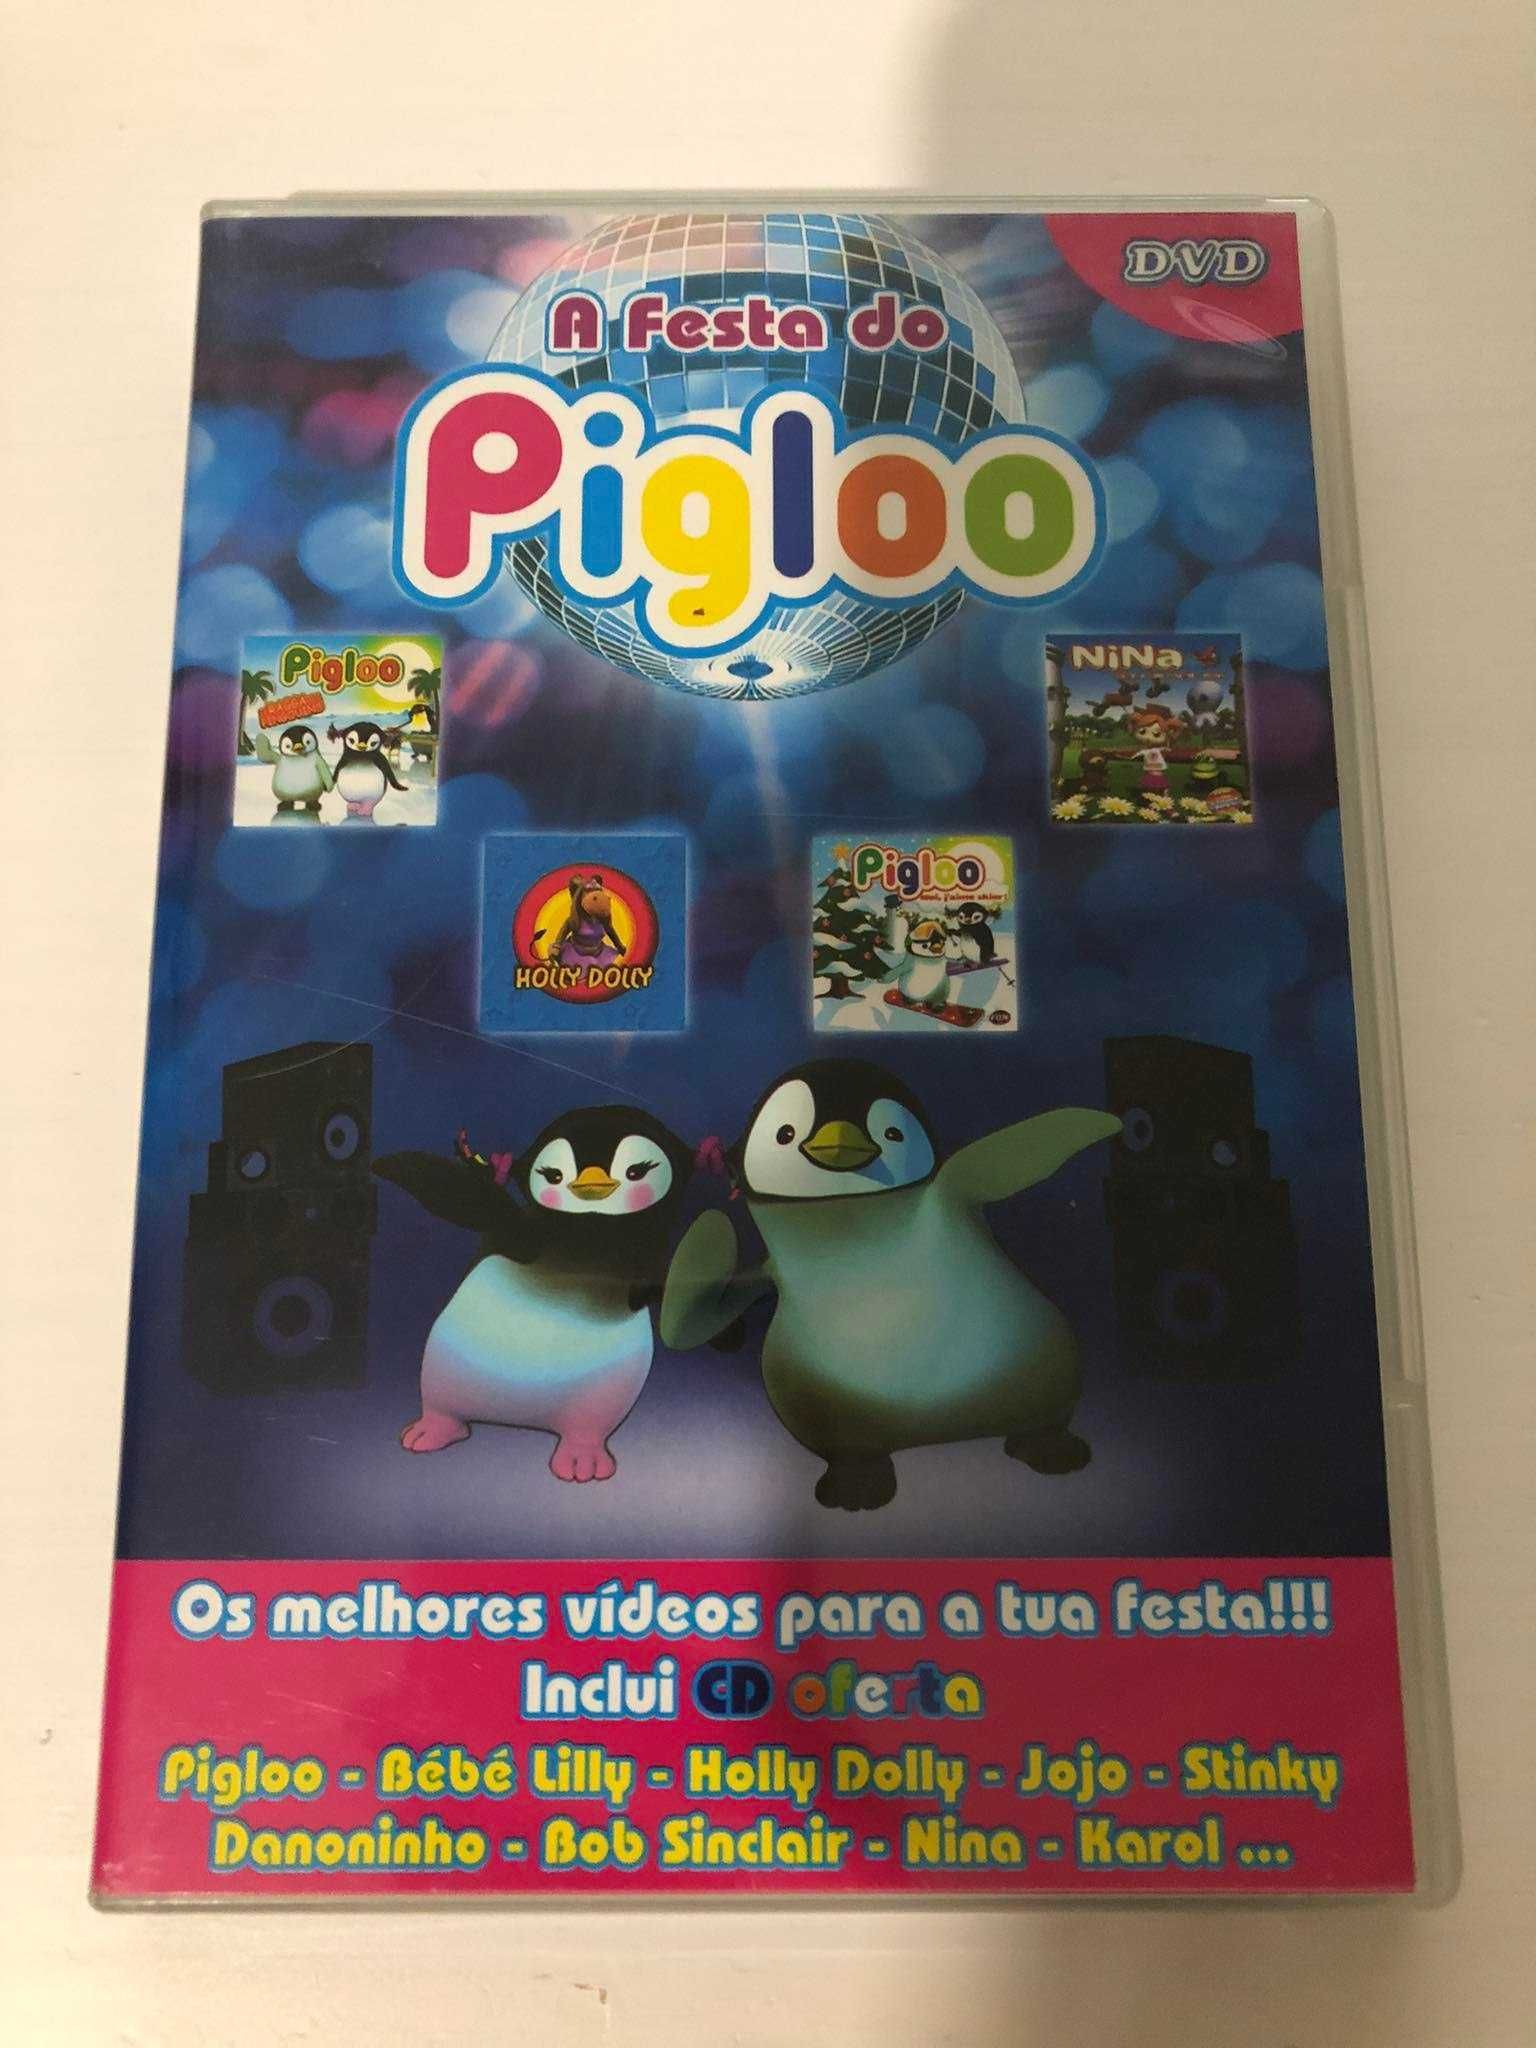 A Festa do Pigloo CD & DVD